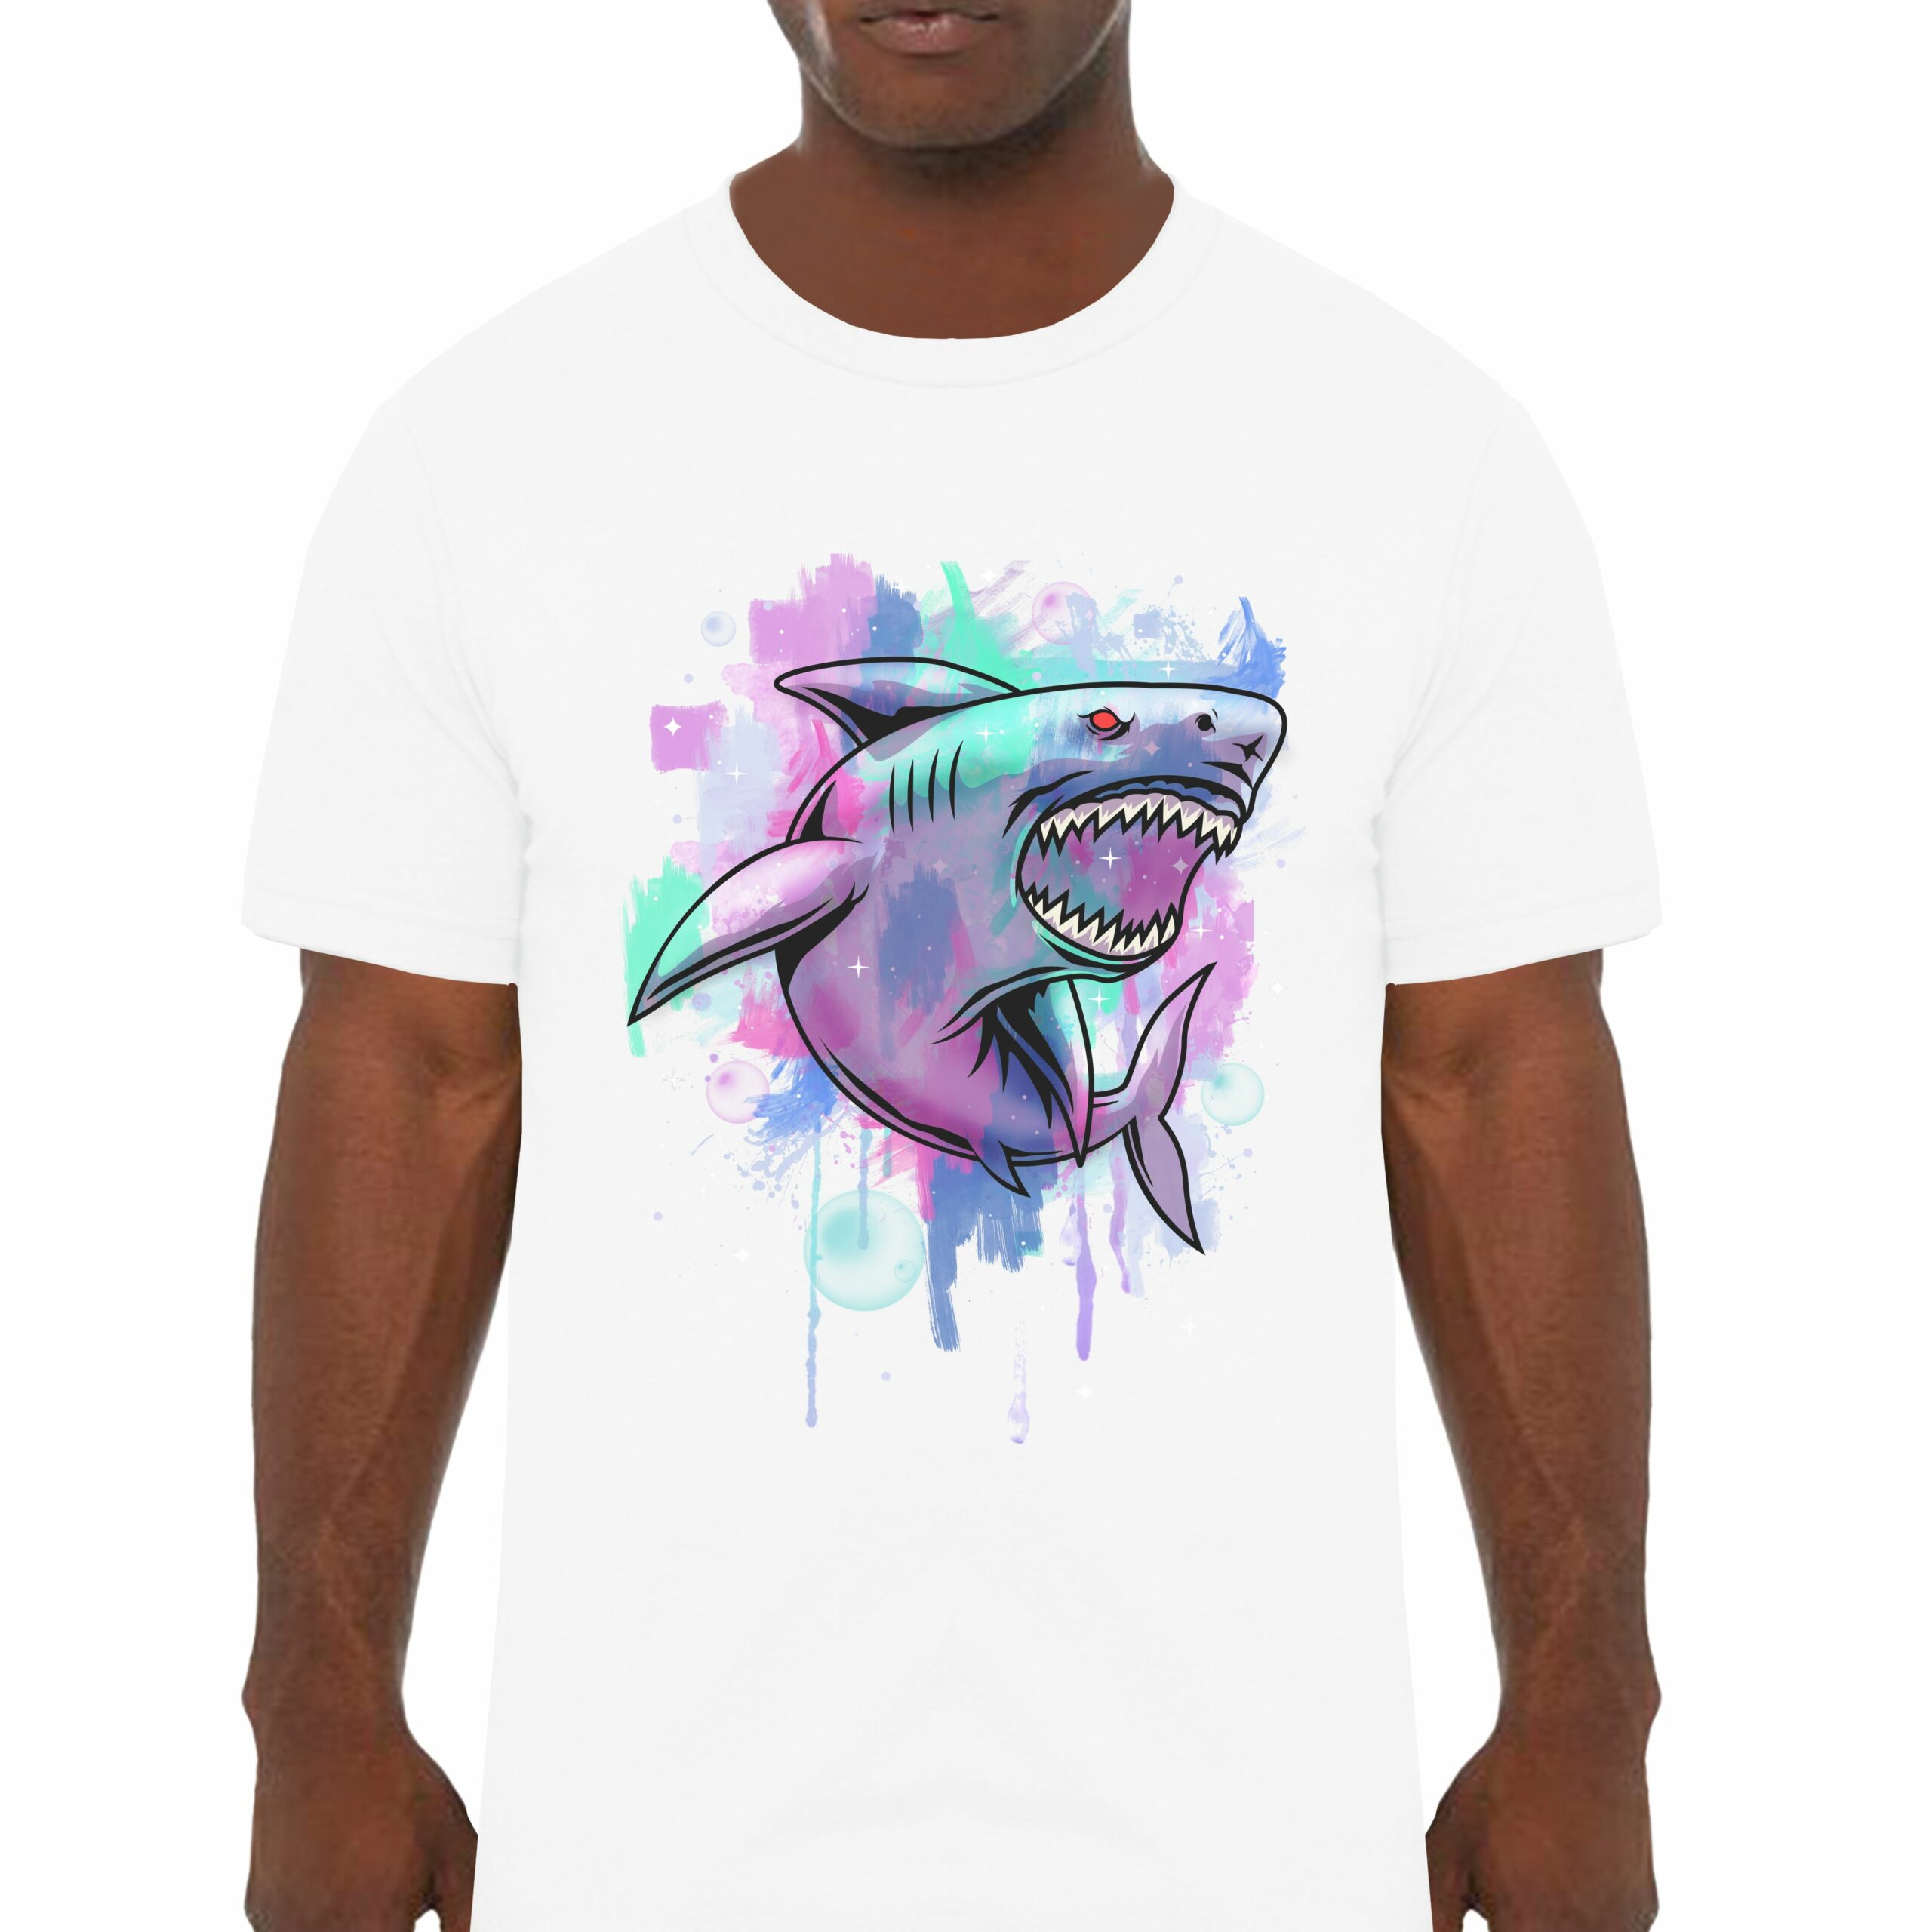 Shark Attack Worlds Classic Graphic T-Shirt - Cuztom Threadz